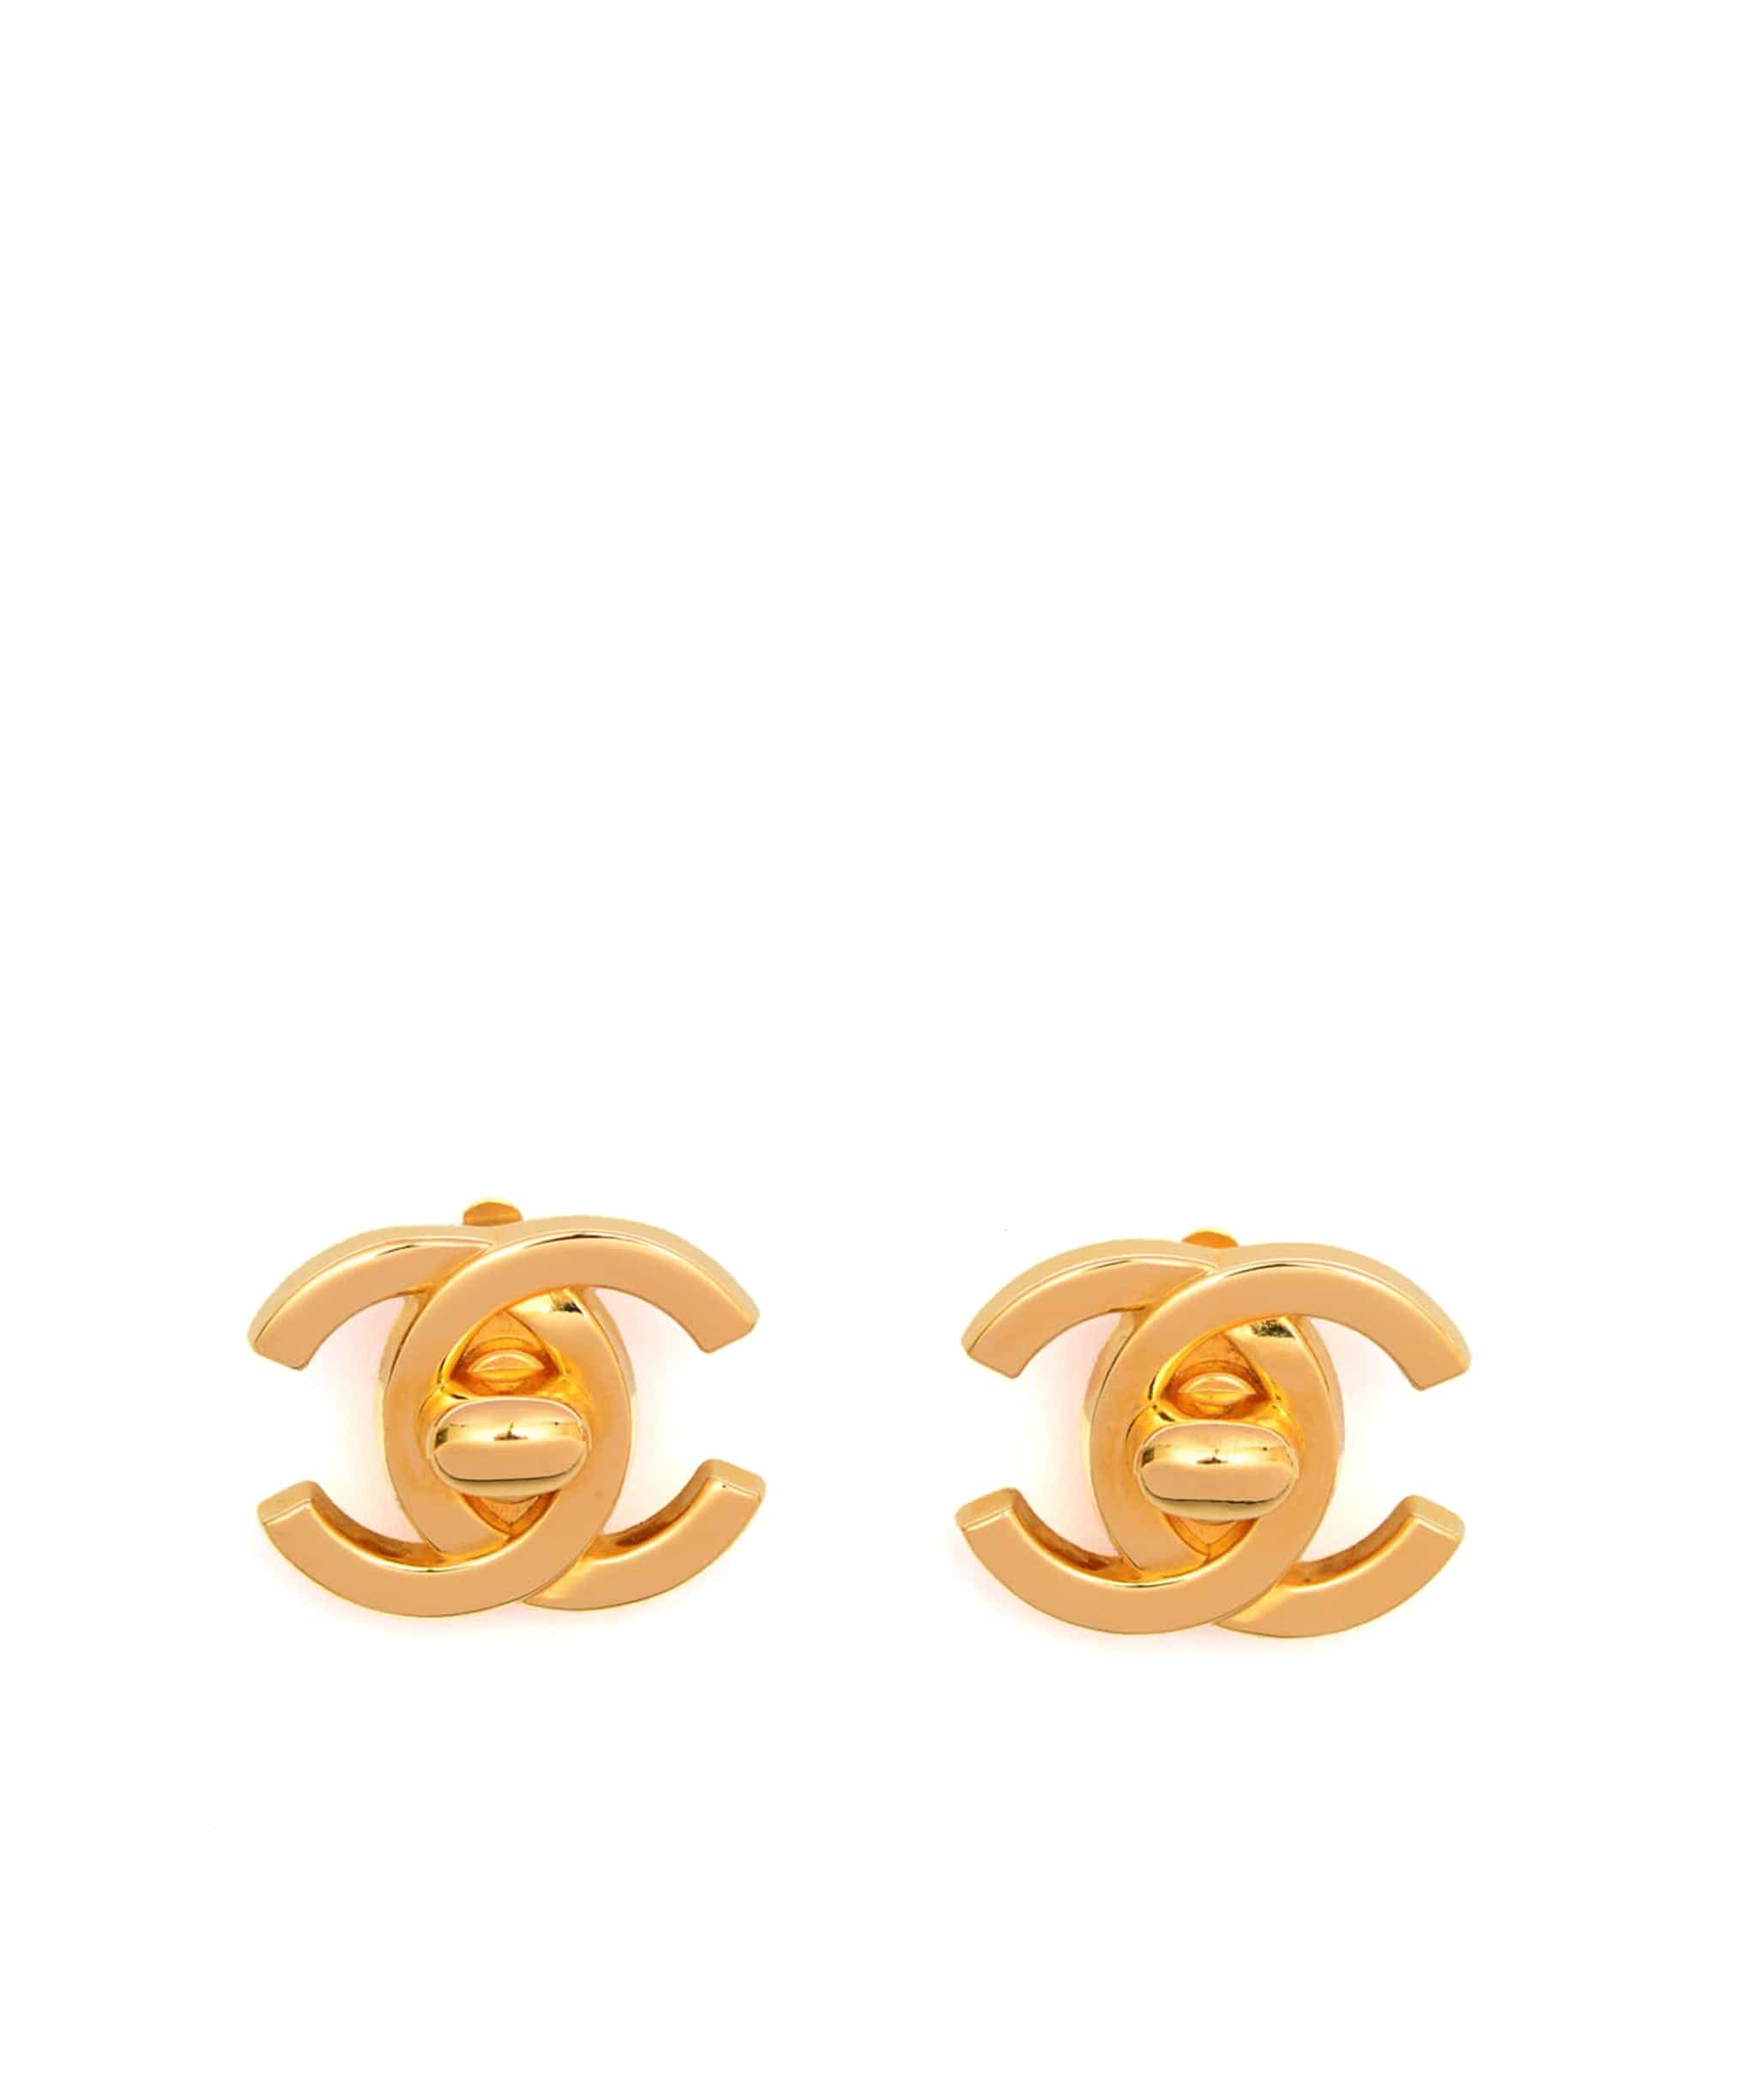 Chanel Chanel Vintage Clip-on Earrings - Turnlock Gold 2cm SKC1132